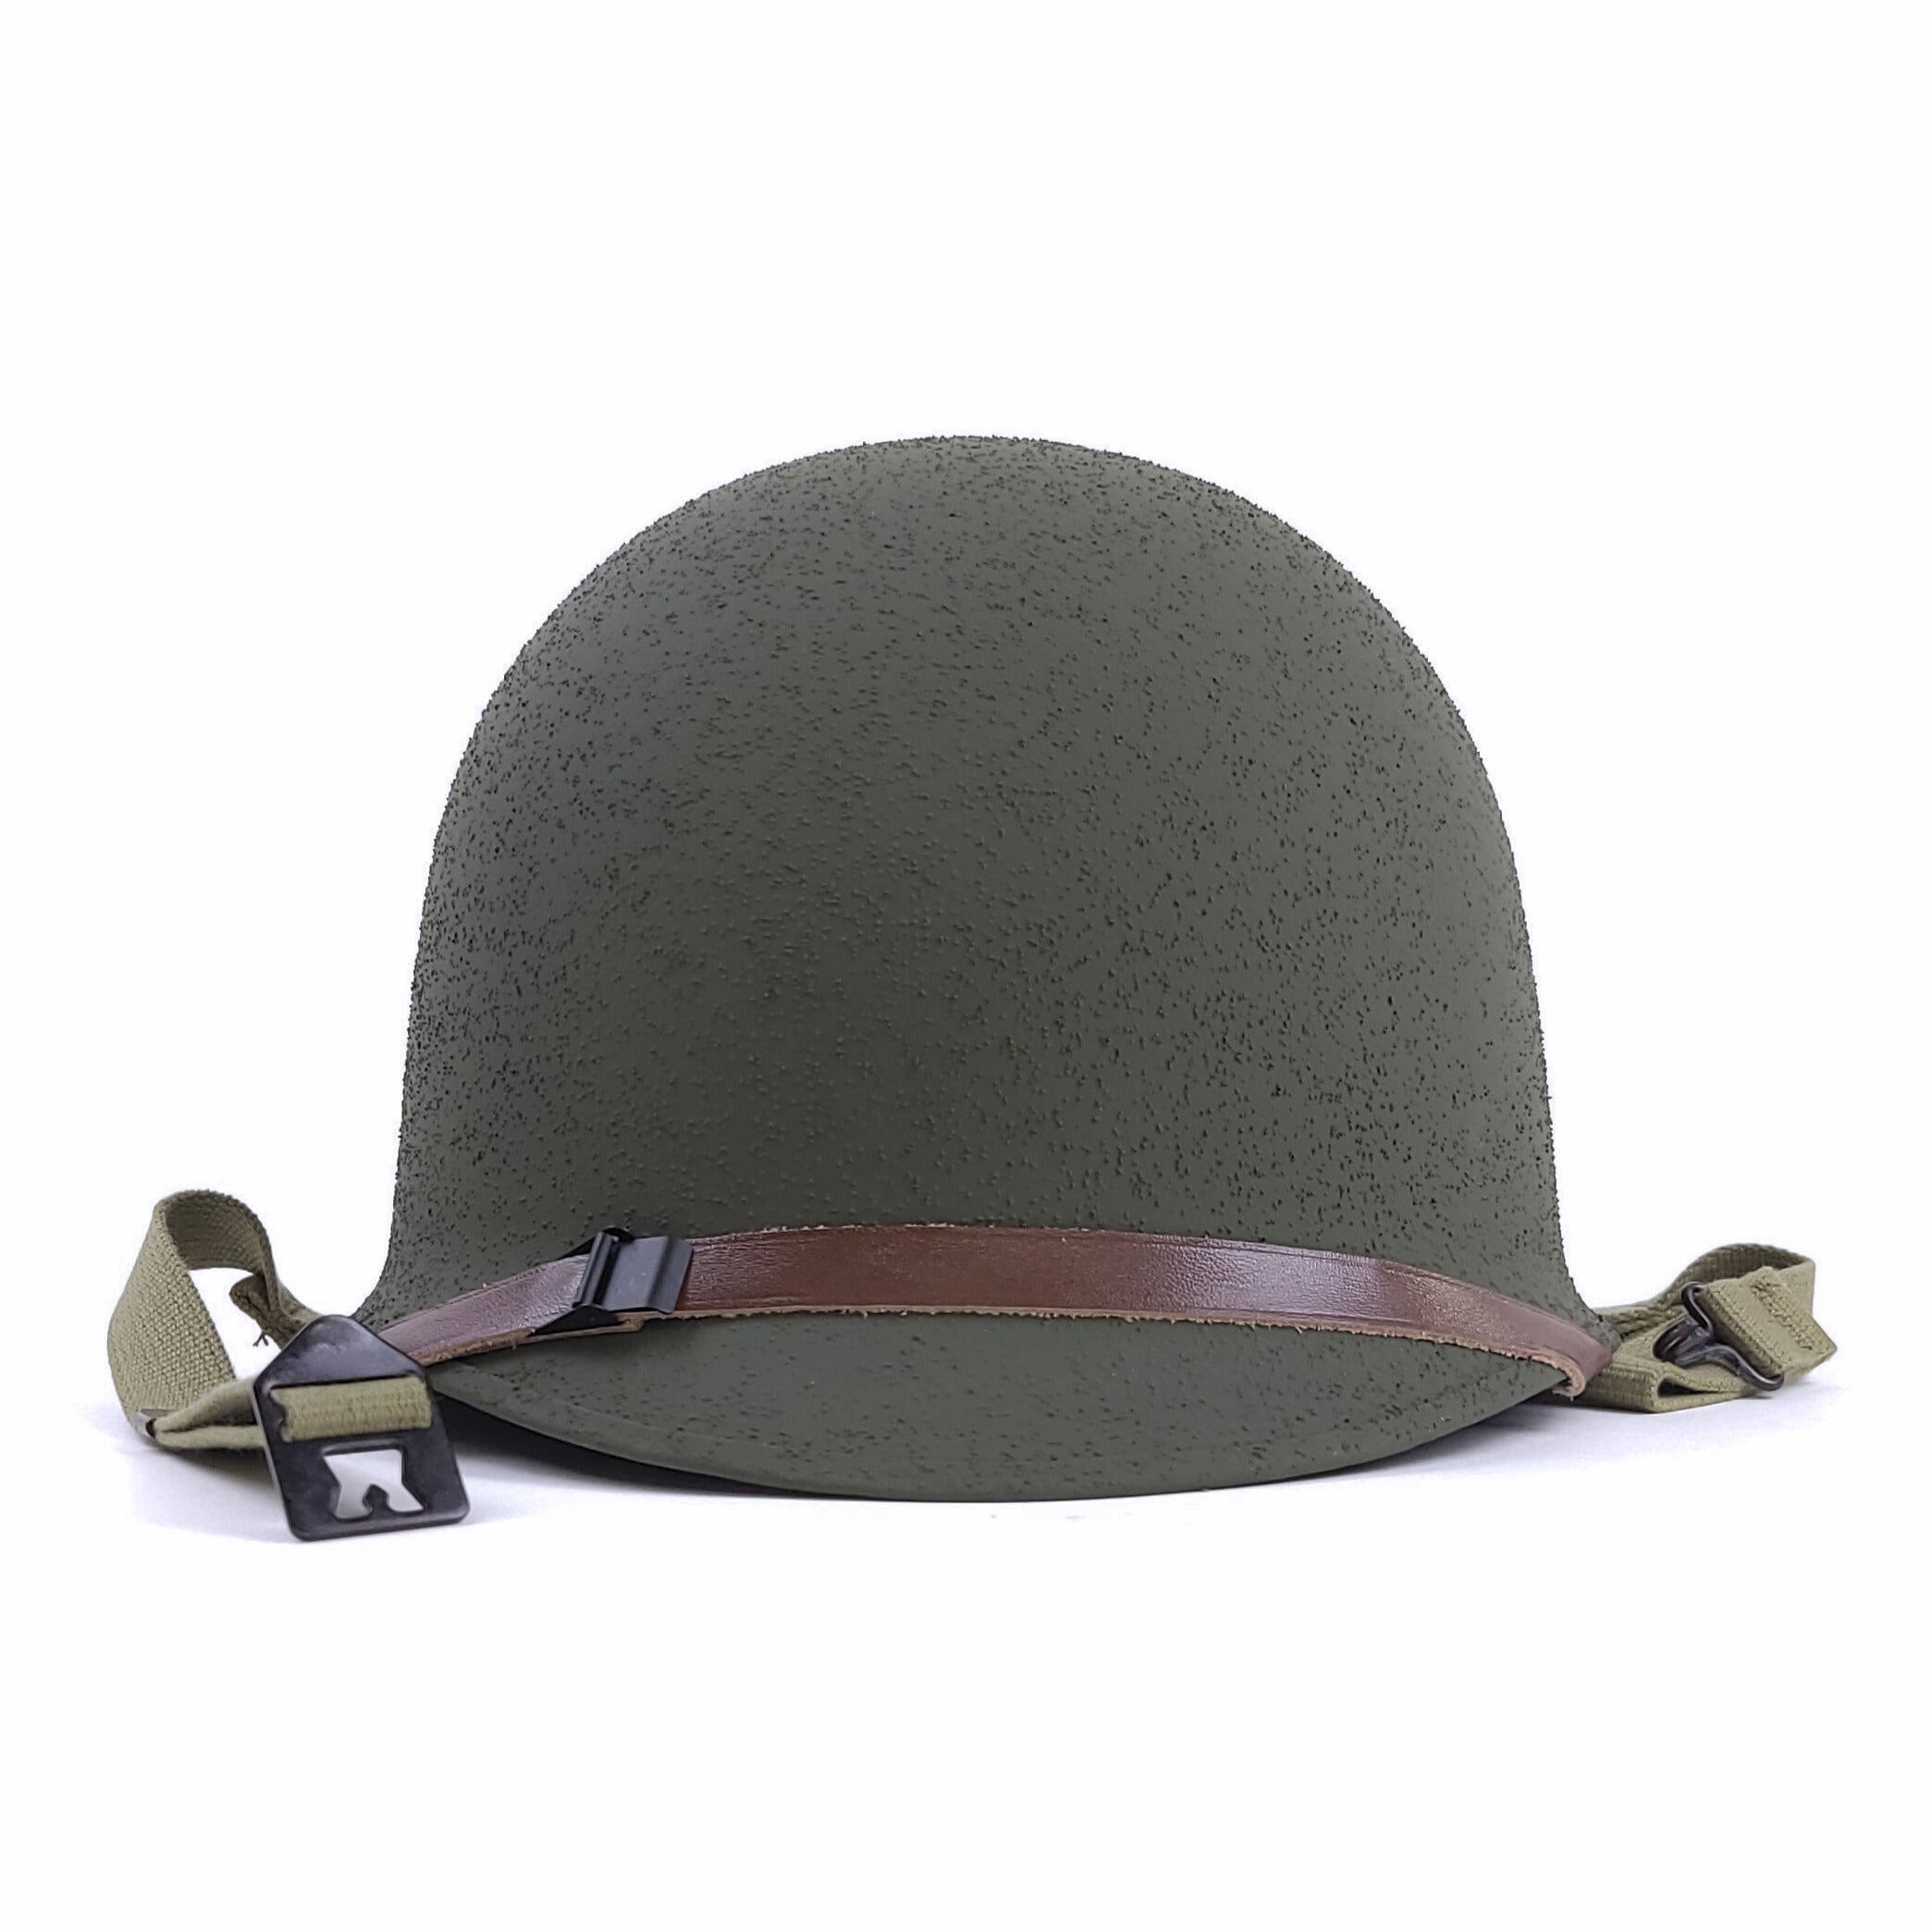 Euro Clone Helmet - Mid War - Infantry